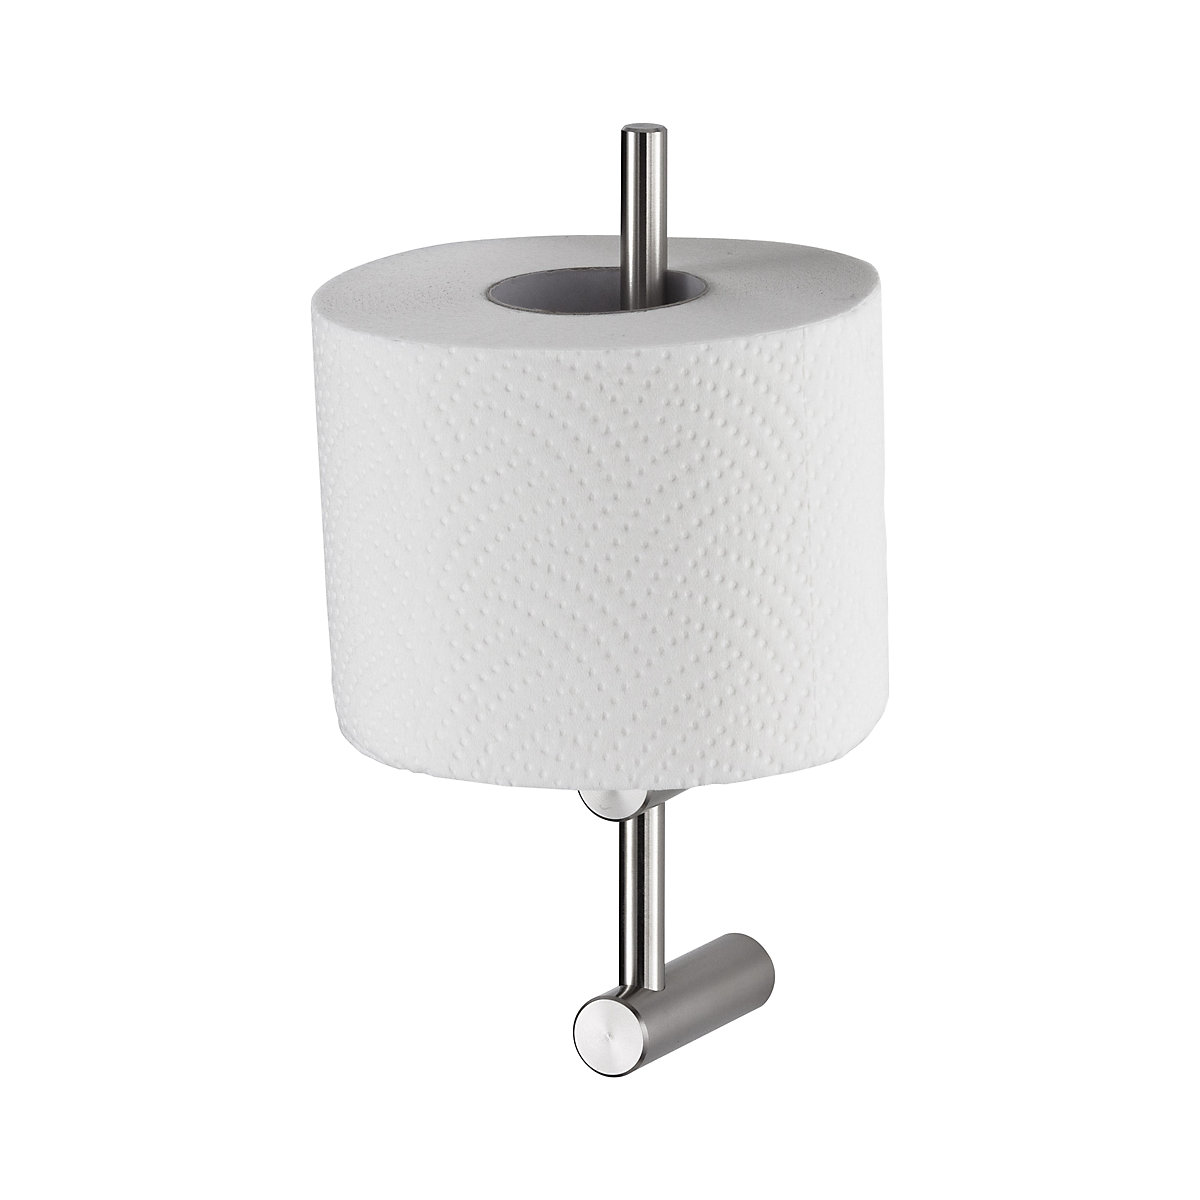 AIR-WOLF – Toilet paper holder